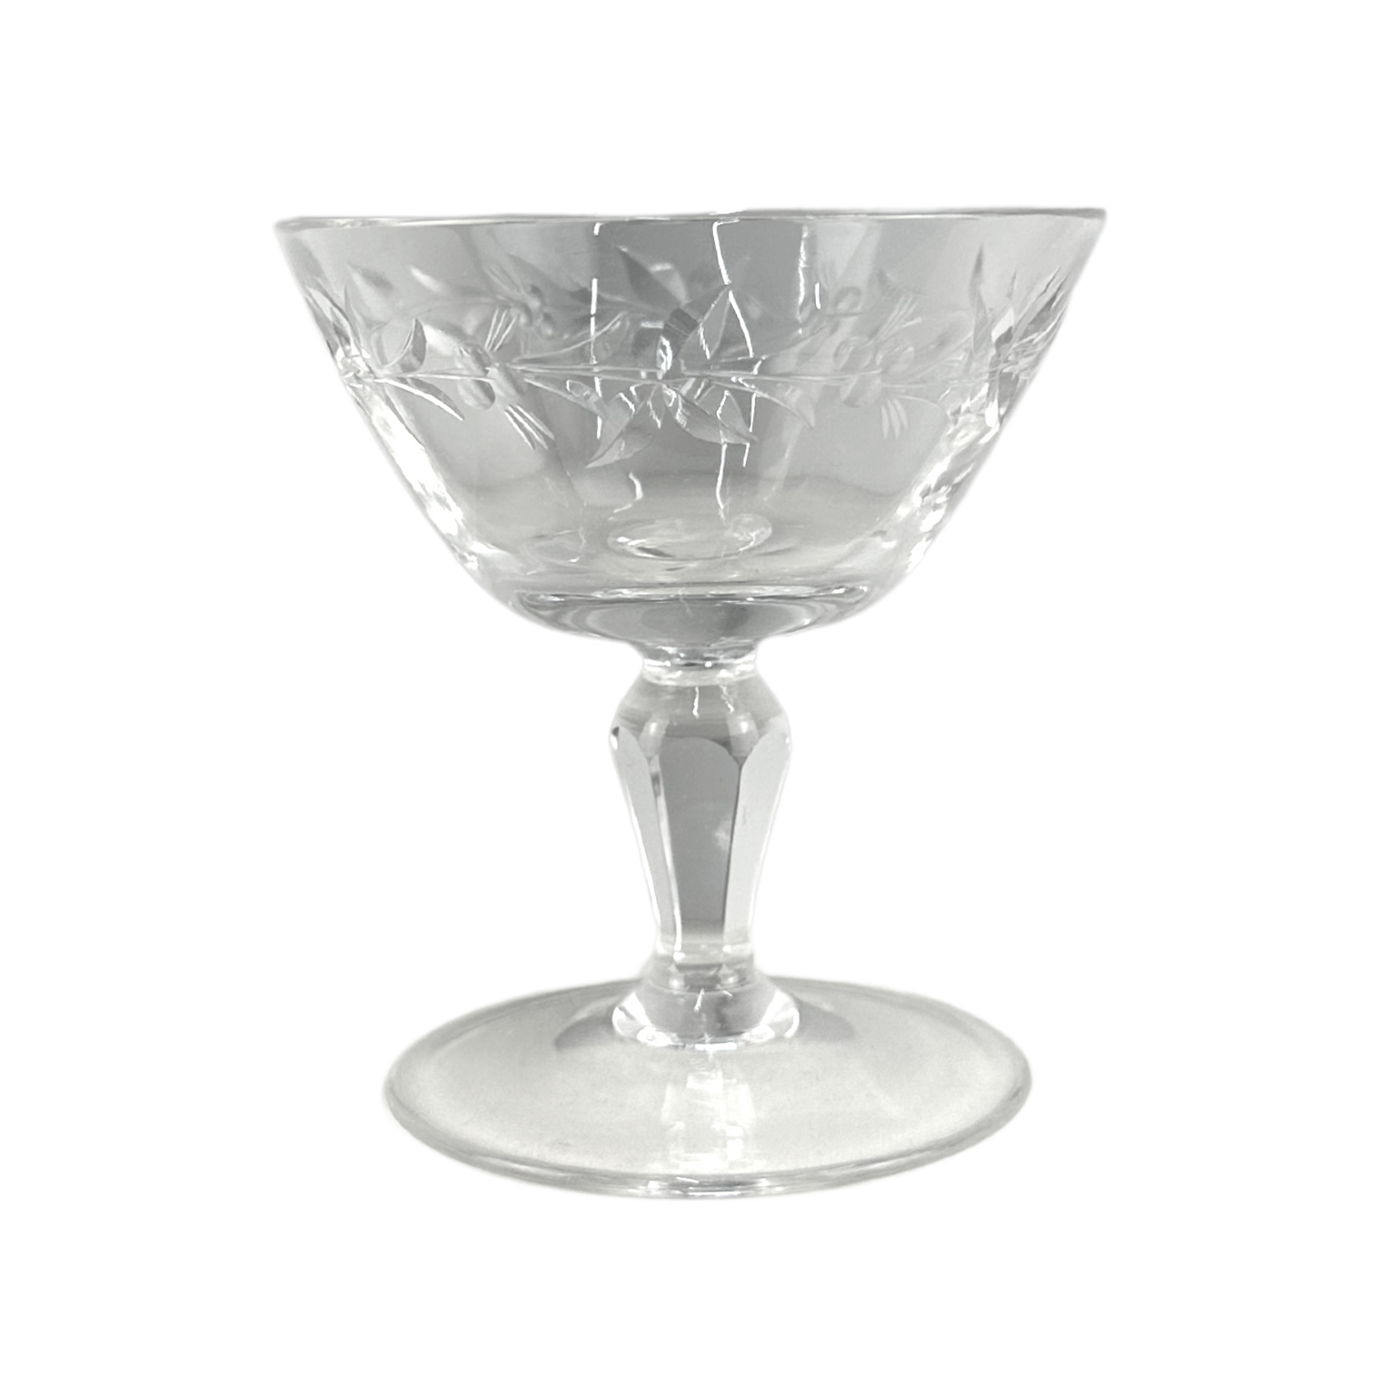 Kusak Crystal 'Belvedere', Martini- Set of 2